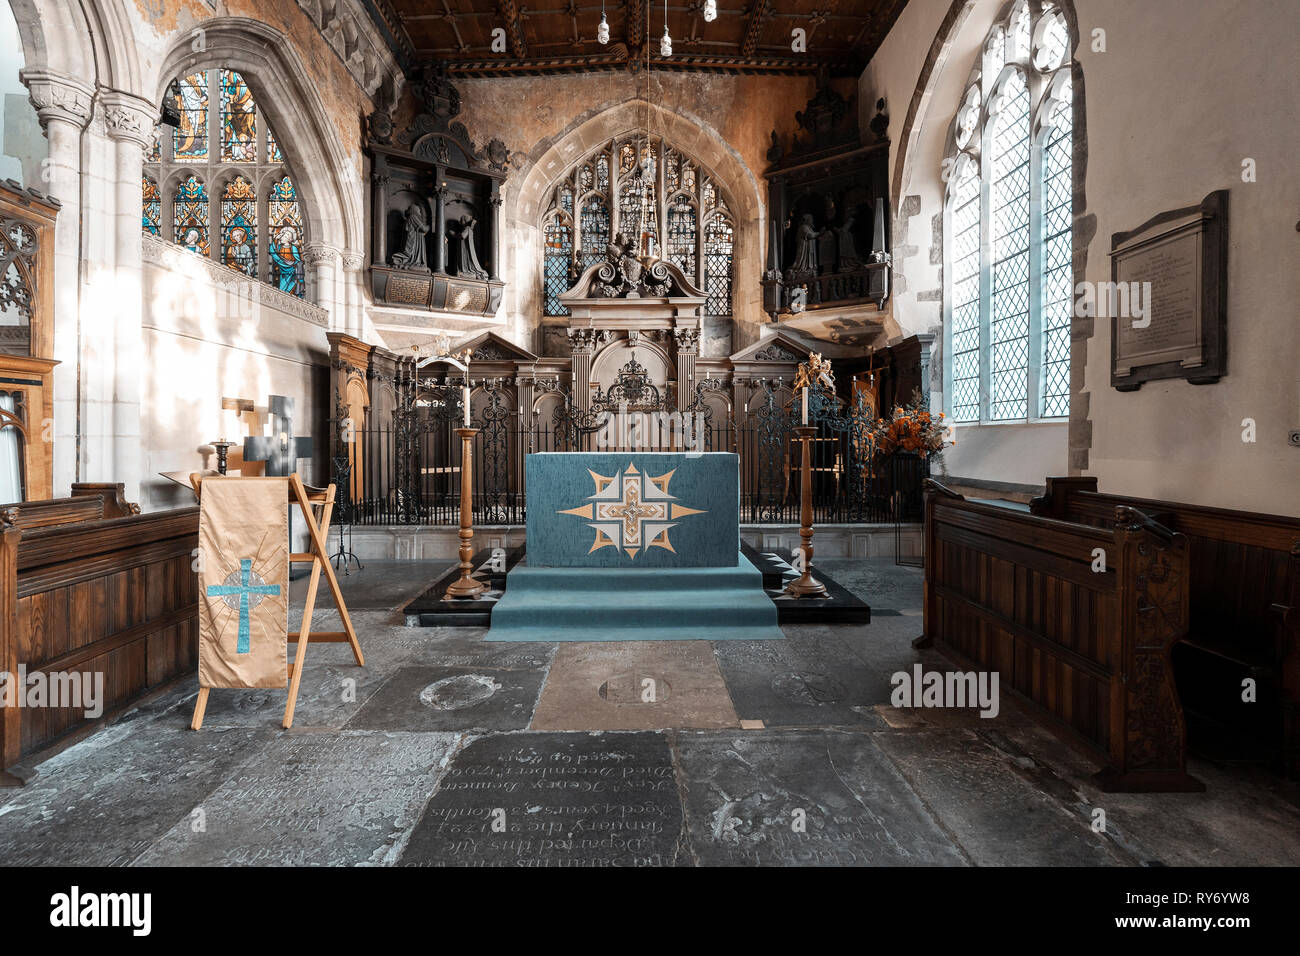 Altar in St Thomas's church Salisbury UK Stock Photo